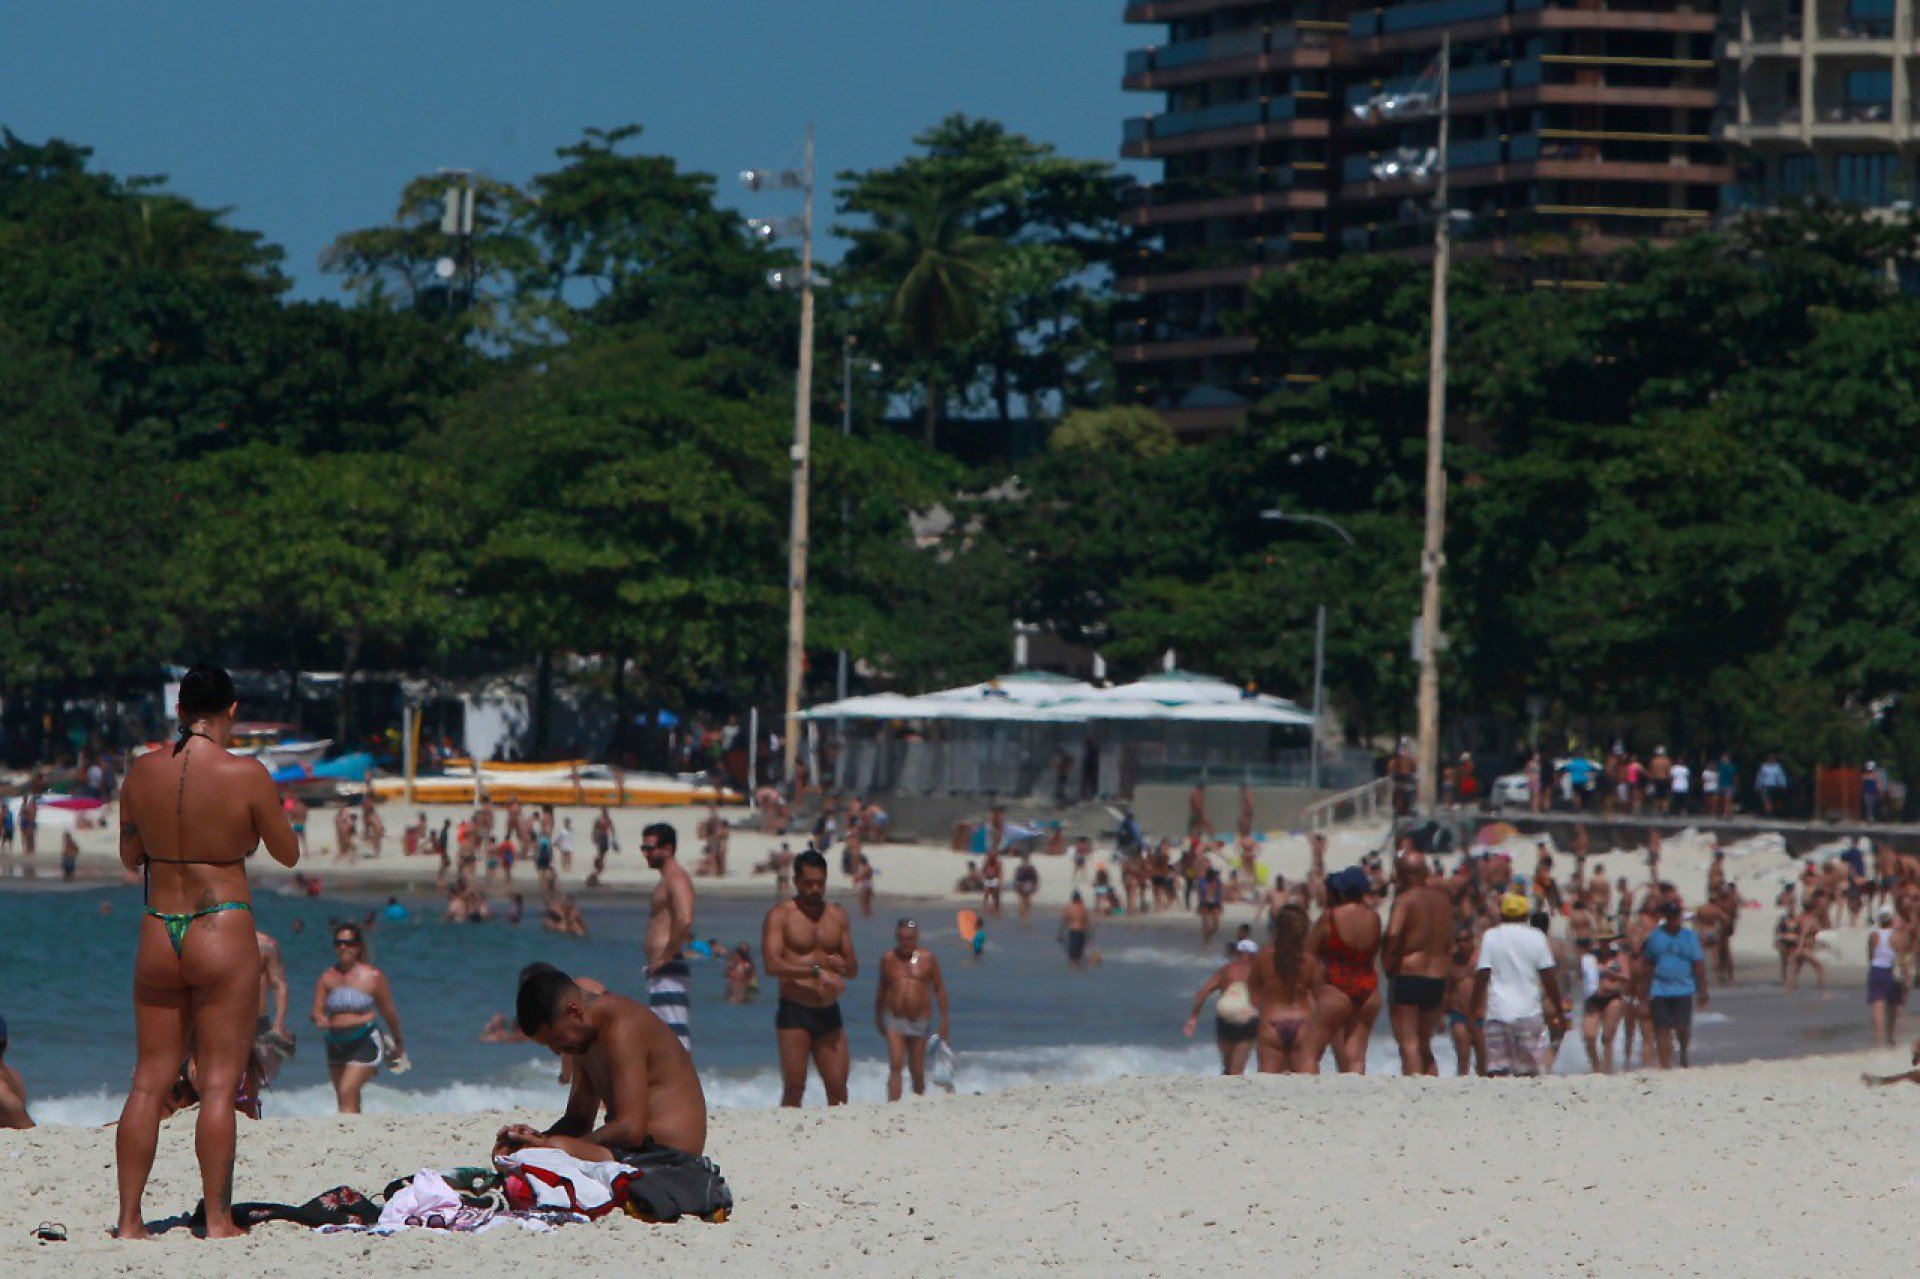 Fotos da praia de Copacabana lotada neste domingo - Luciano Belford